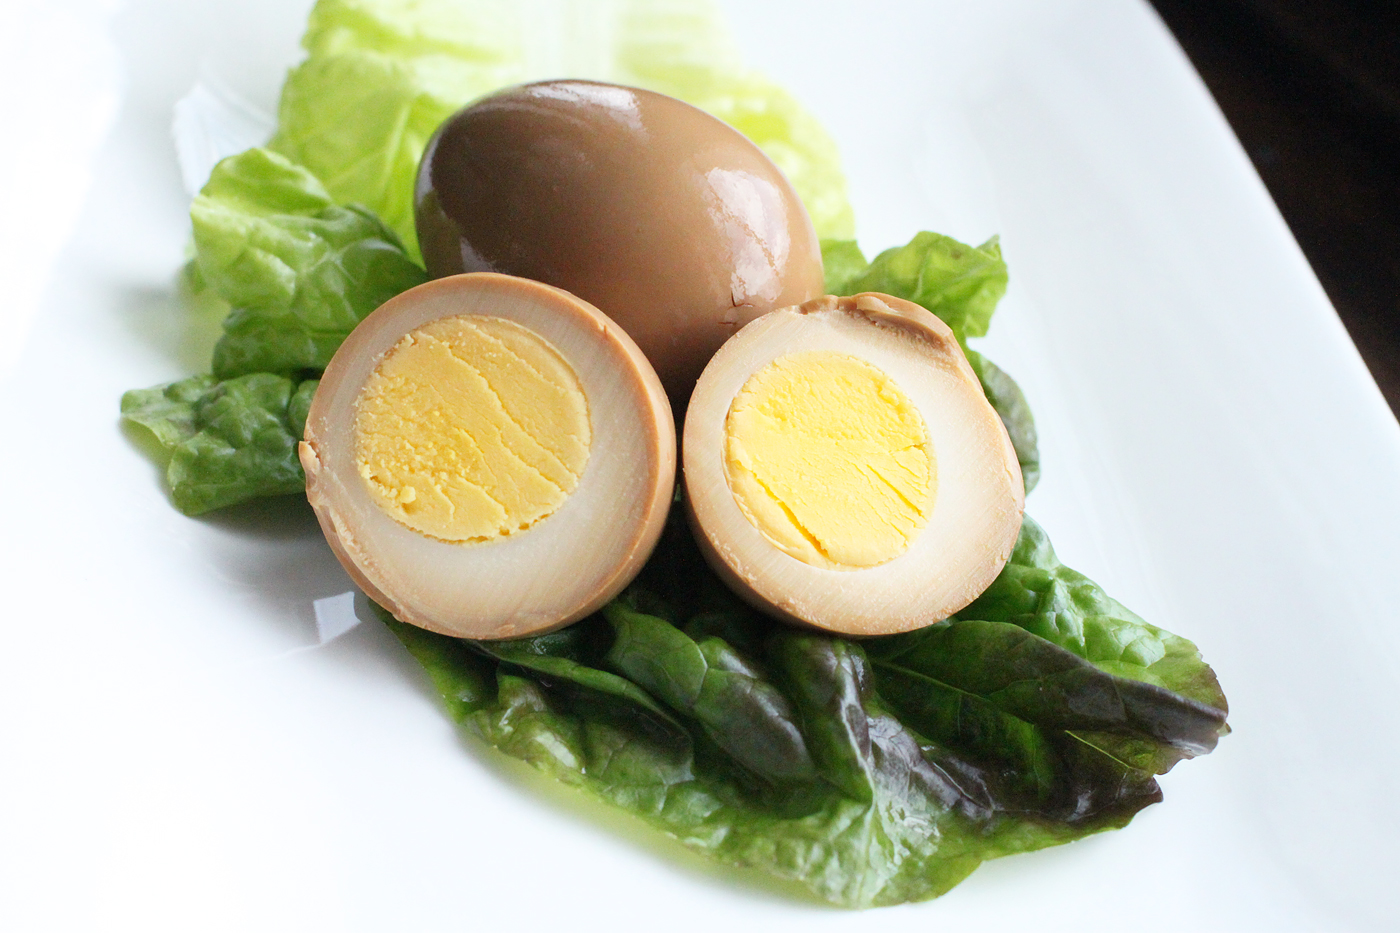 http://www.simplecomfortfood.com/wp-content/uploads/2013/03/asian-hardboiled-eggs-high.jpg